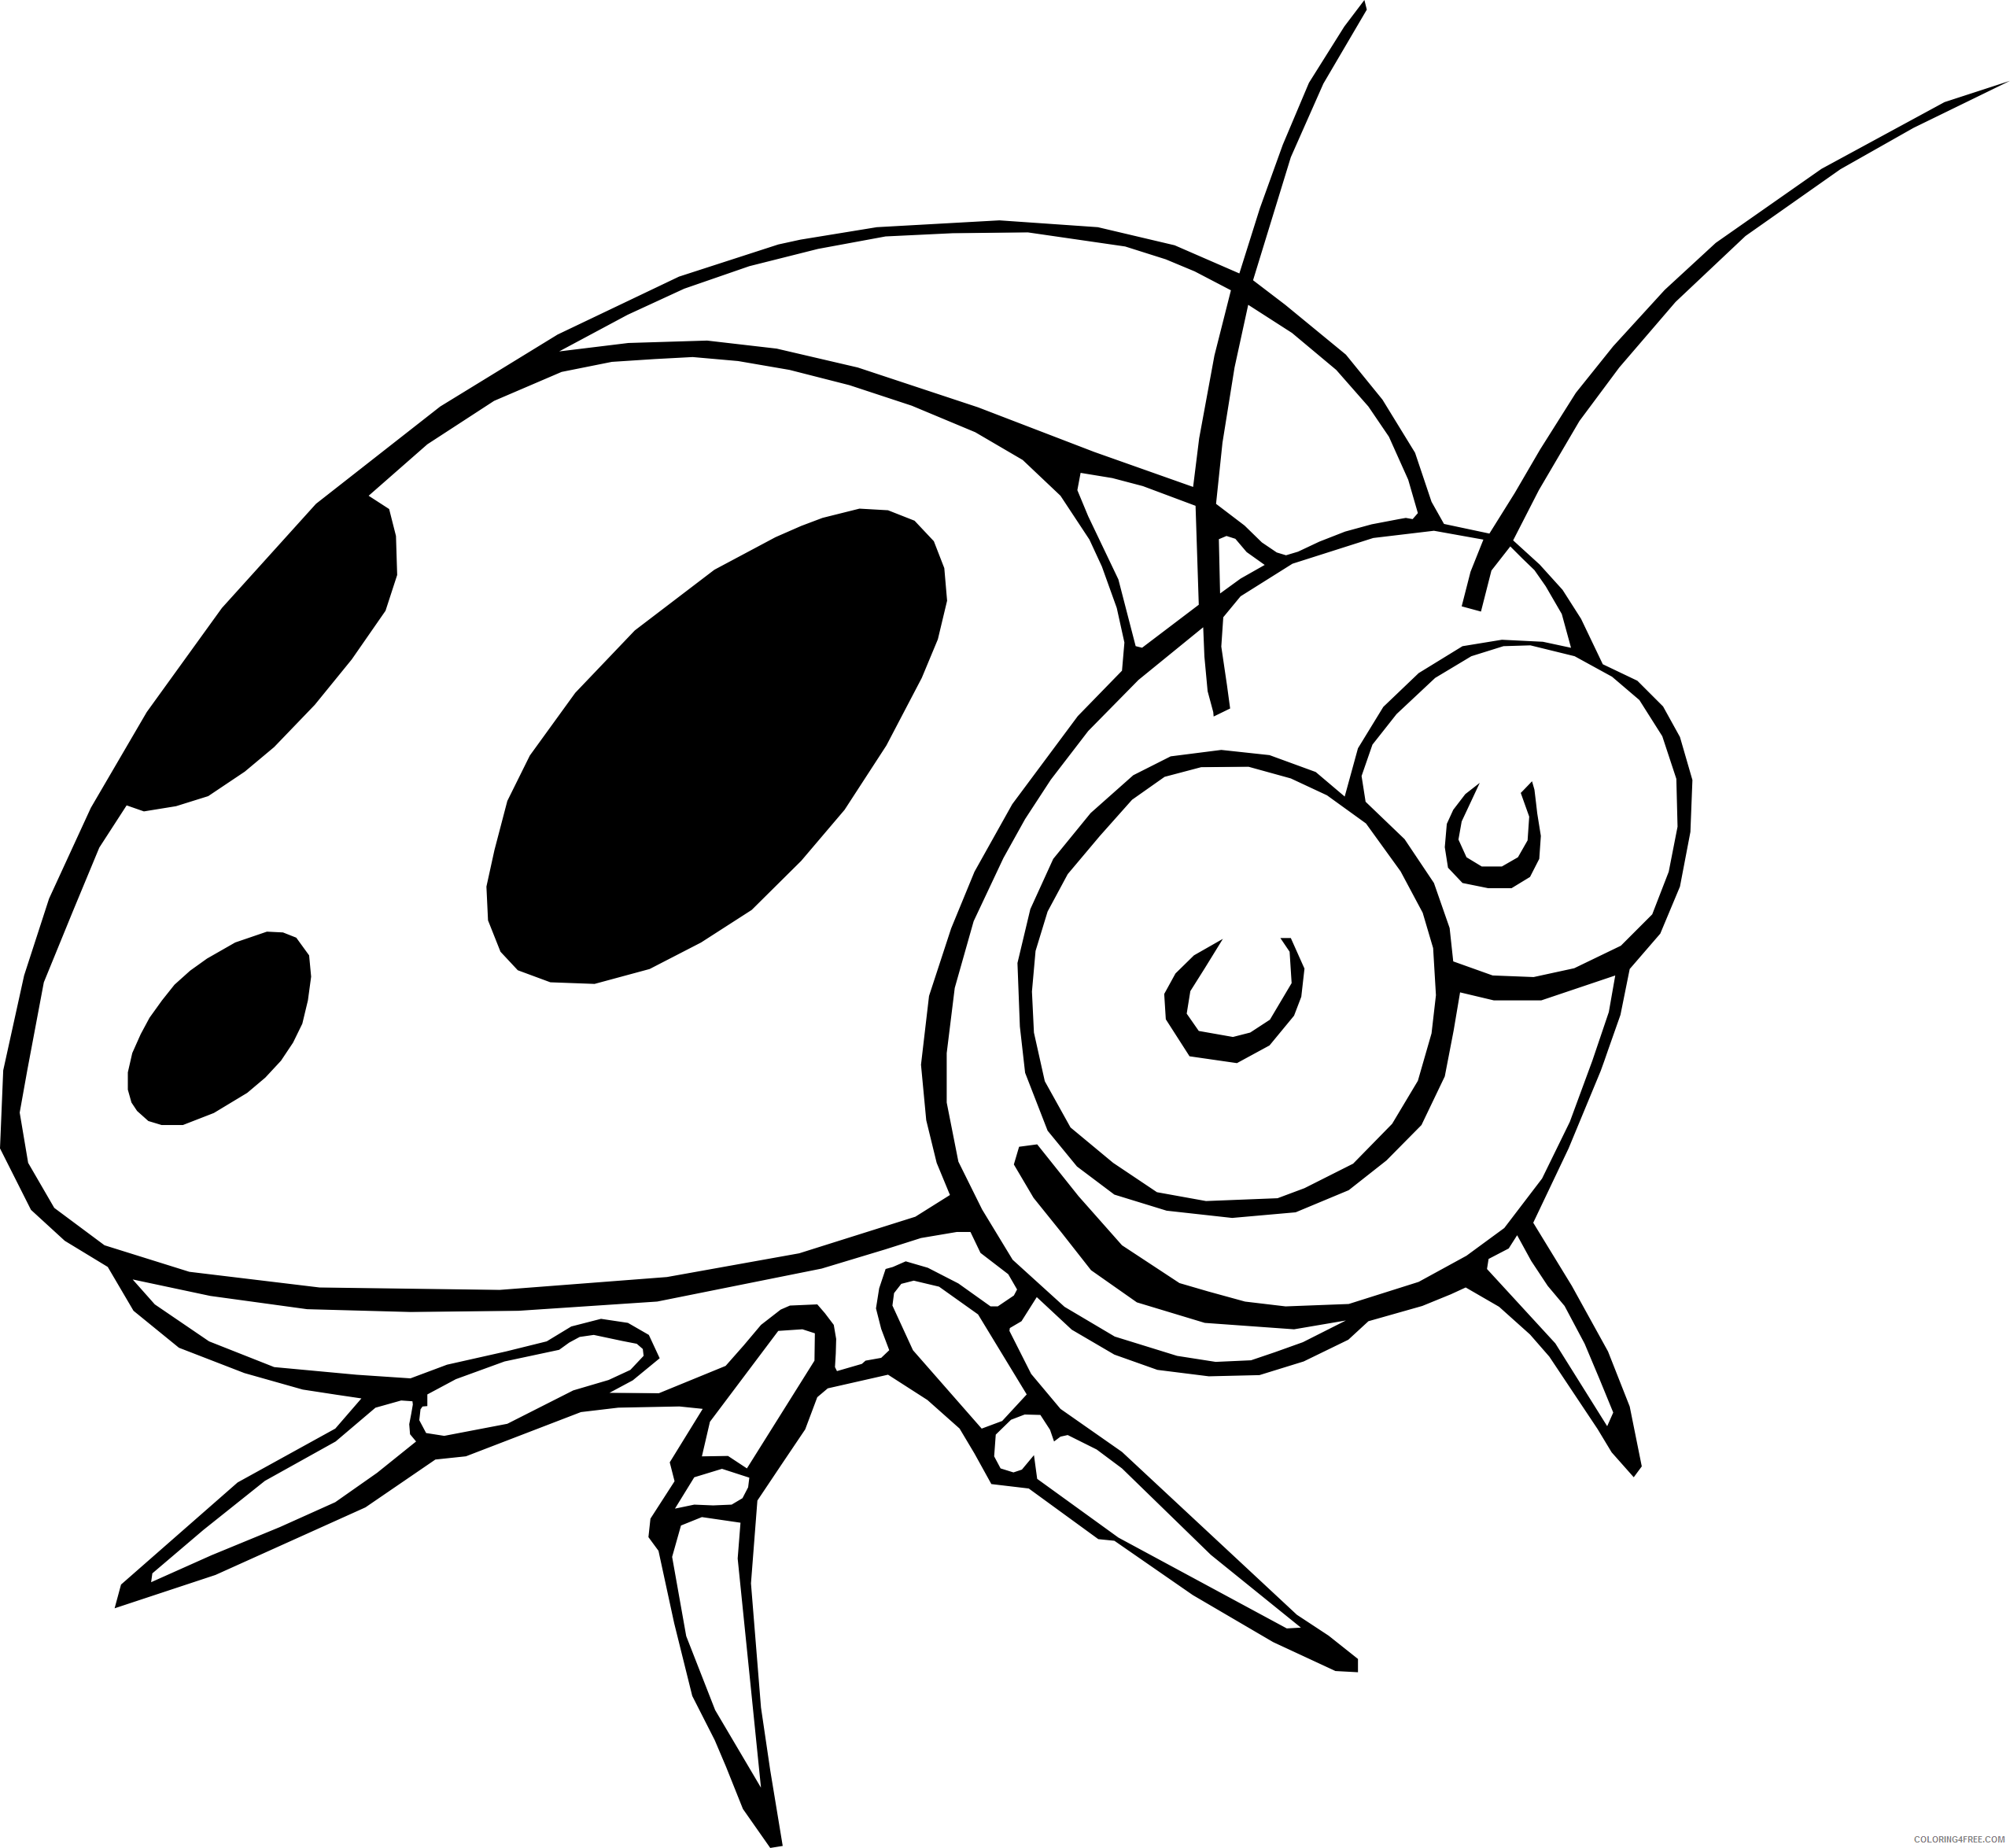 Ladybug Coloring Pages Animal Printable Sheets Cute Ladybug 2021 3067 Coloring4free